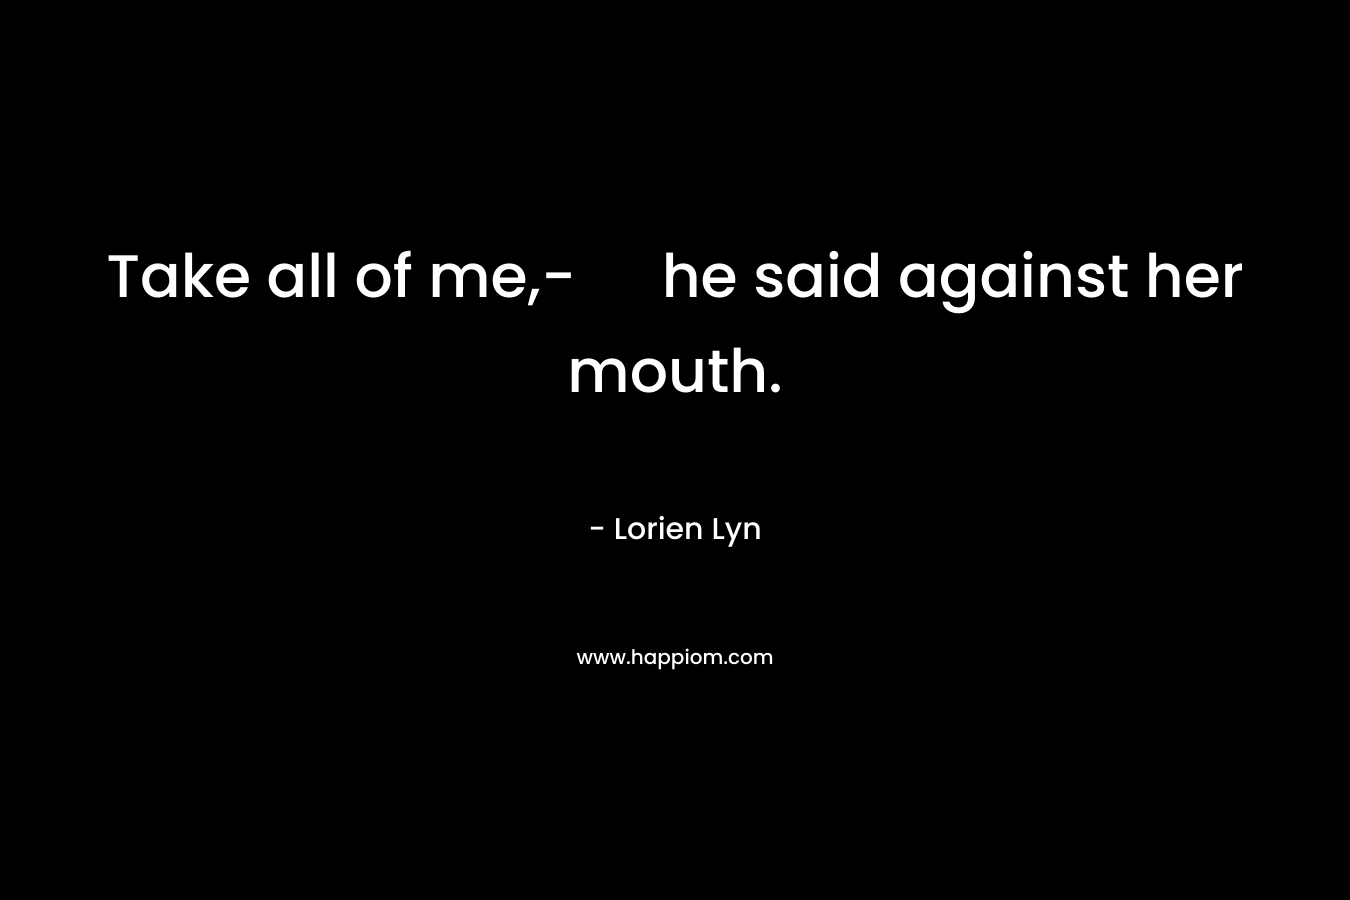 Take all of me,- he said against her mouth. – Lorien Lyn